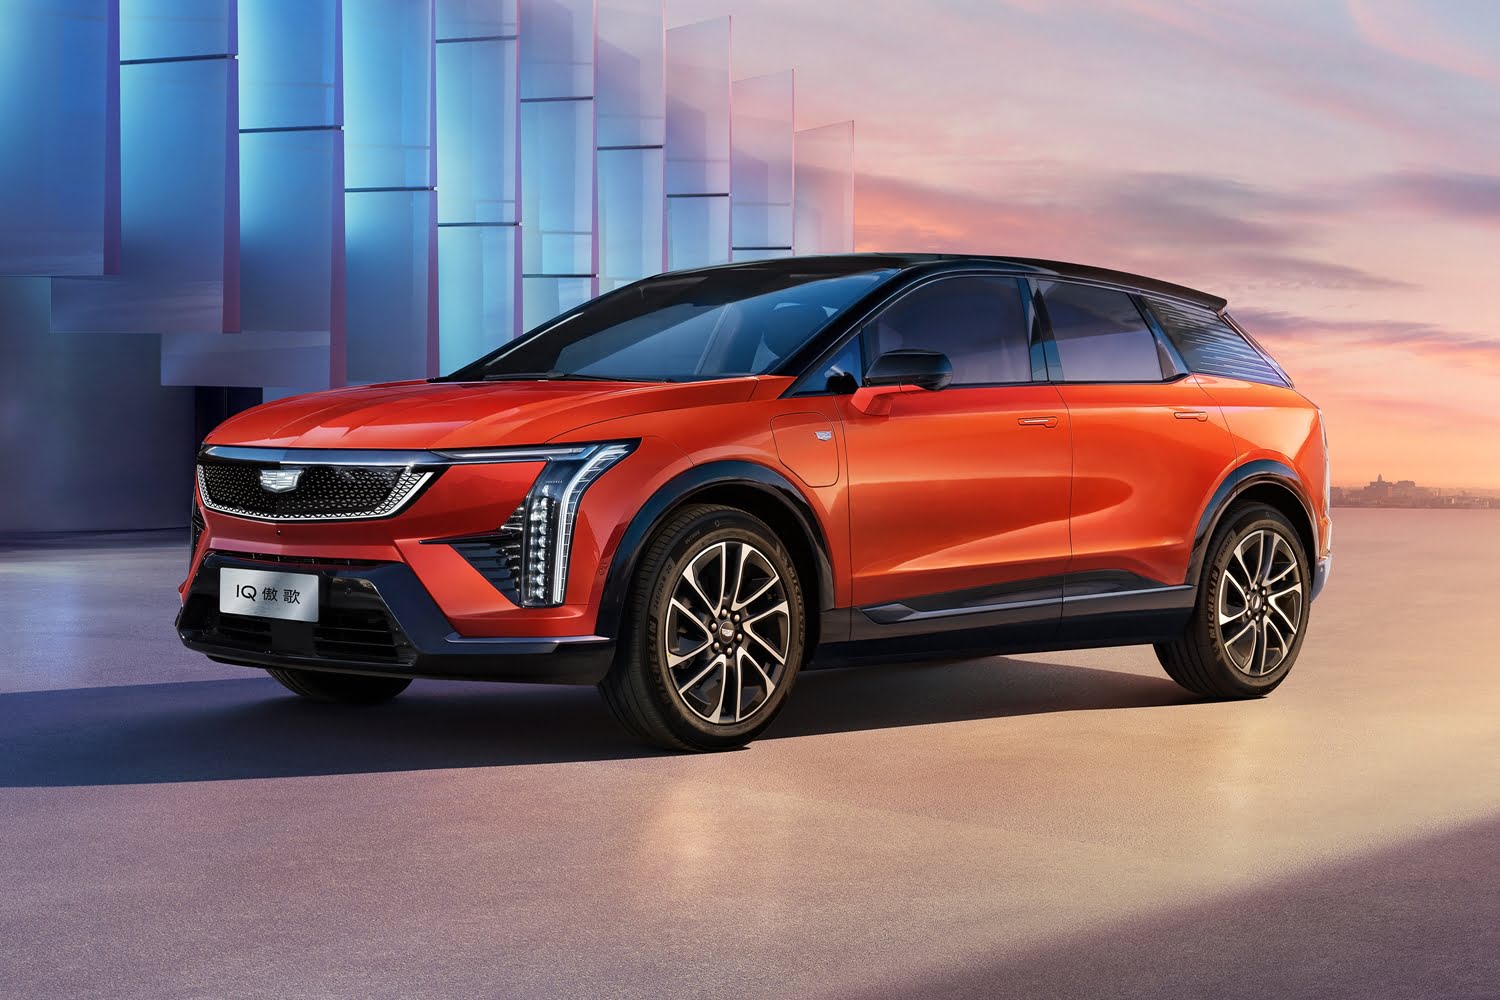 Cadillac unveils China-only Optiq EV